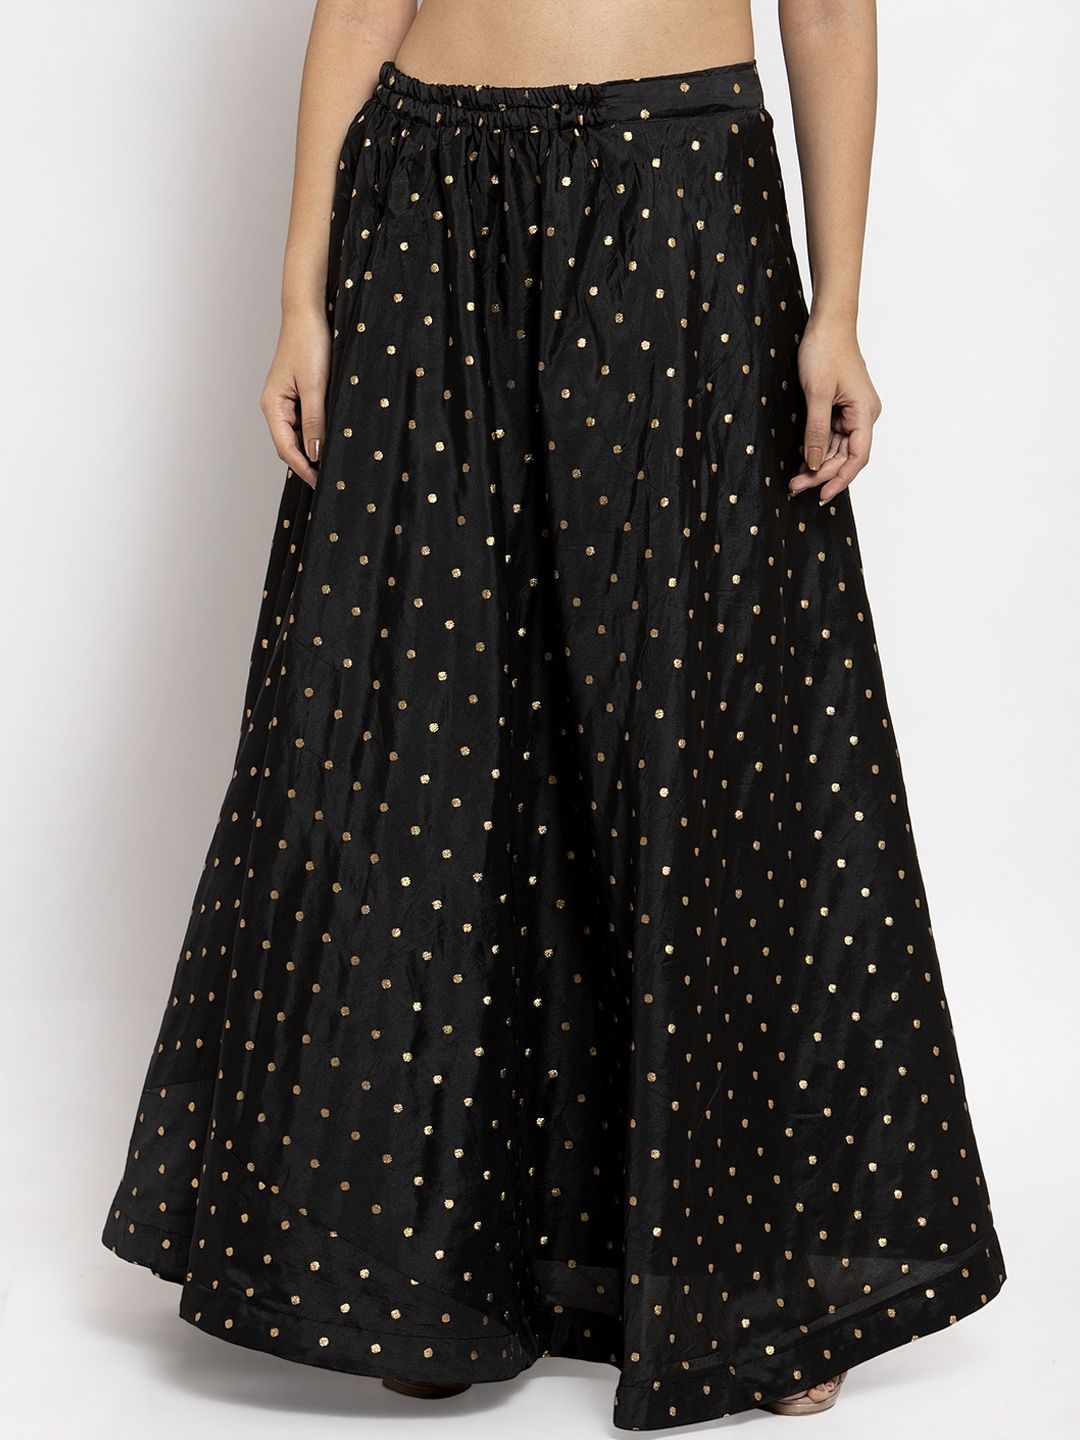 Clora Creation Black & Gold-Coloured Self-Design Flared Maxi Skirt Price in India